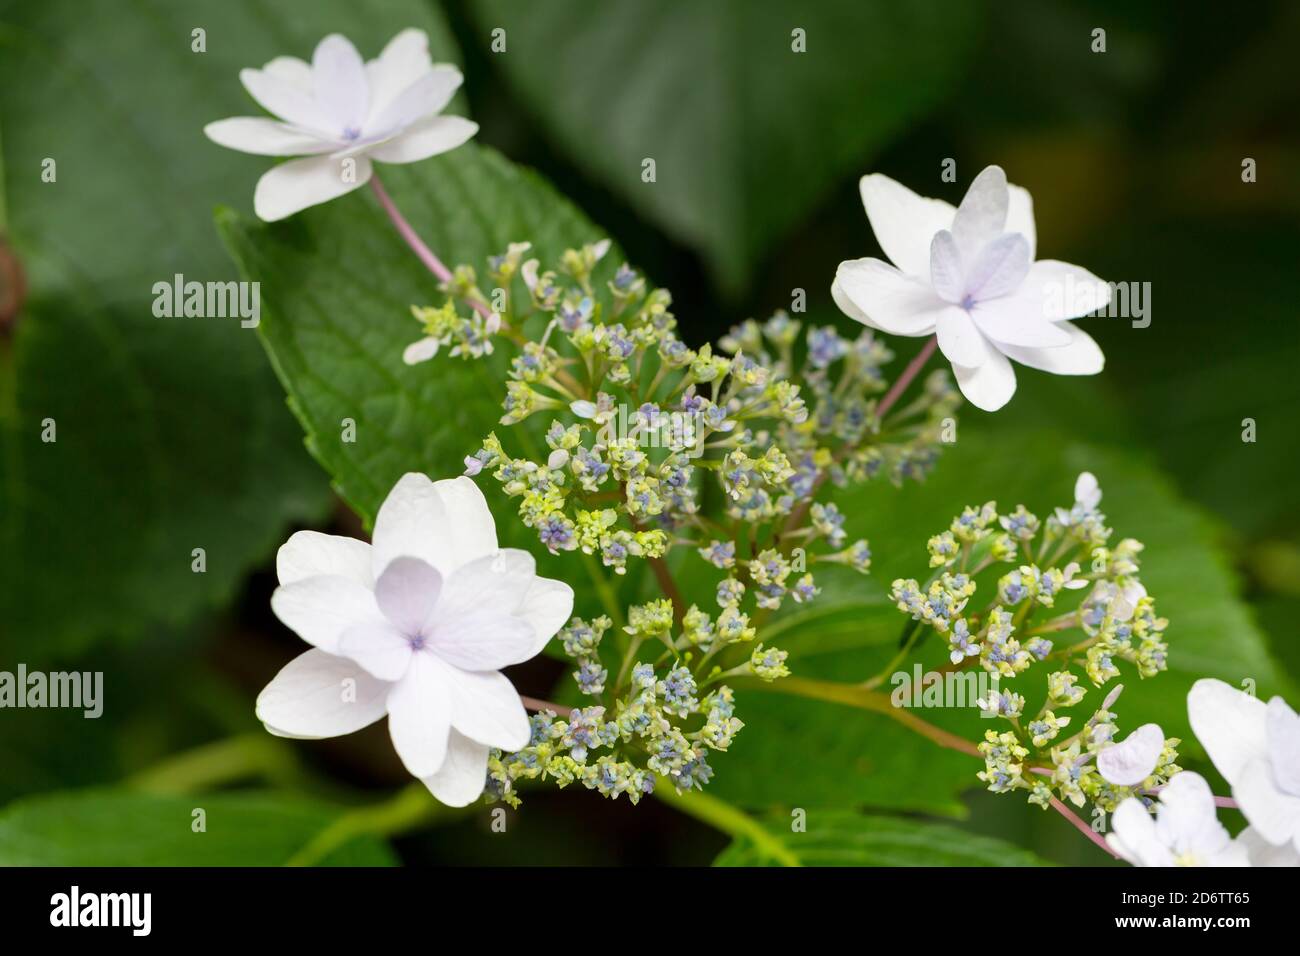 Hydrangea macrophylla, lacecap hydrangea with double white flowers Stock Photo